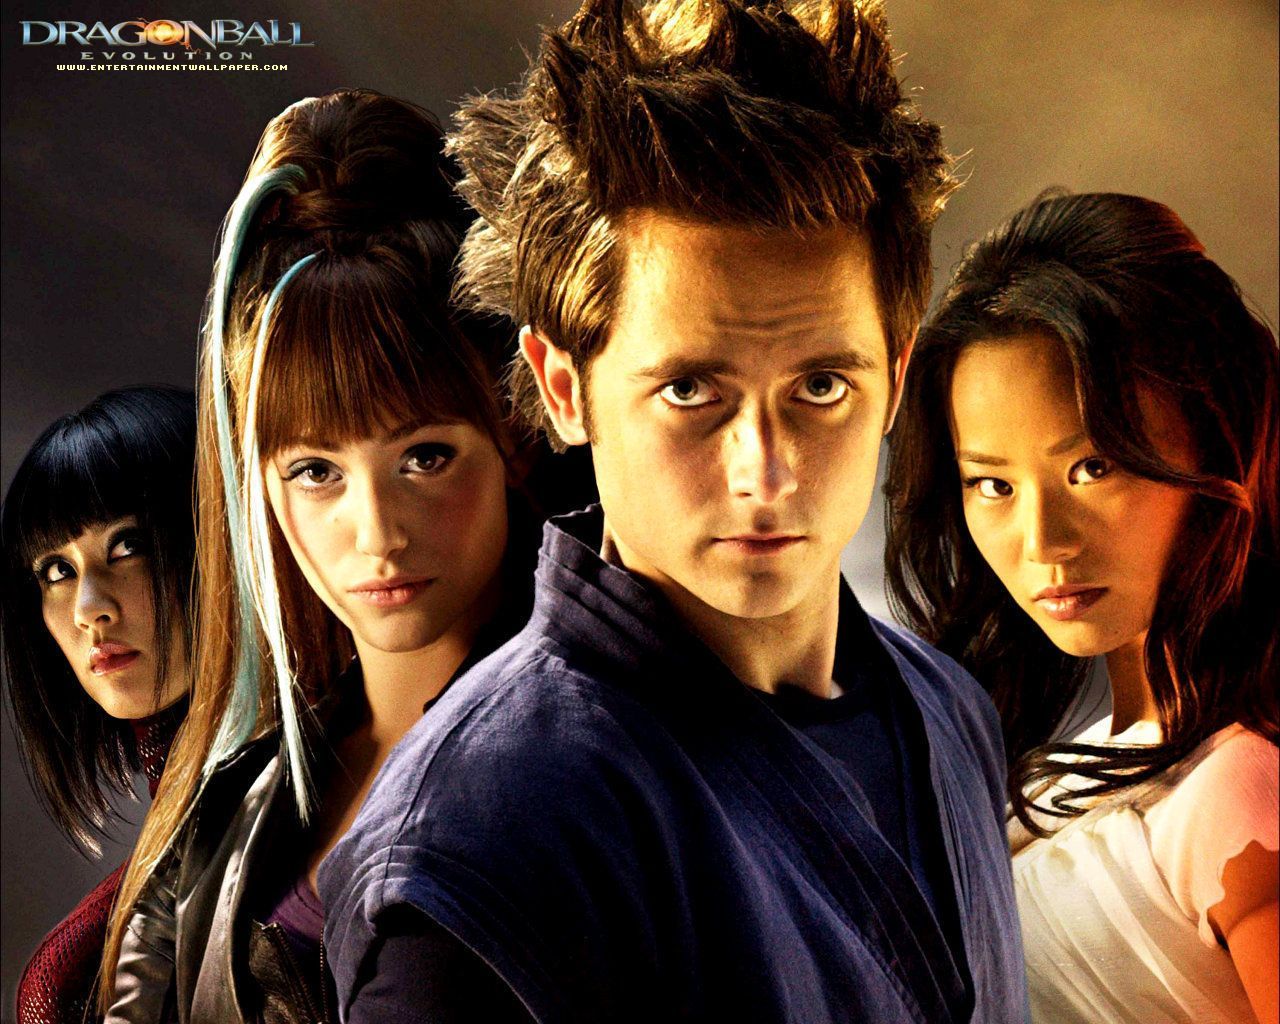 Dragonball Evolution (2009) French movie cover